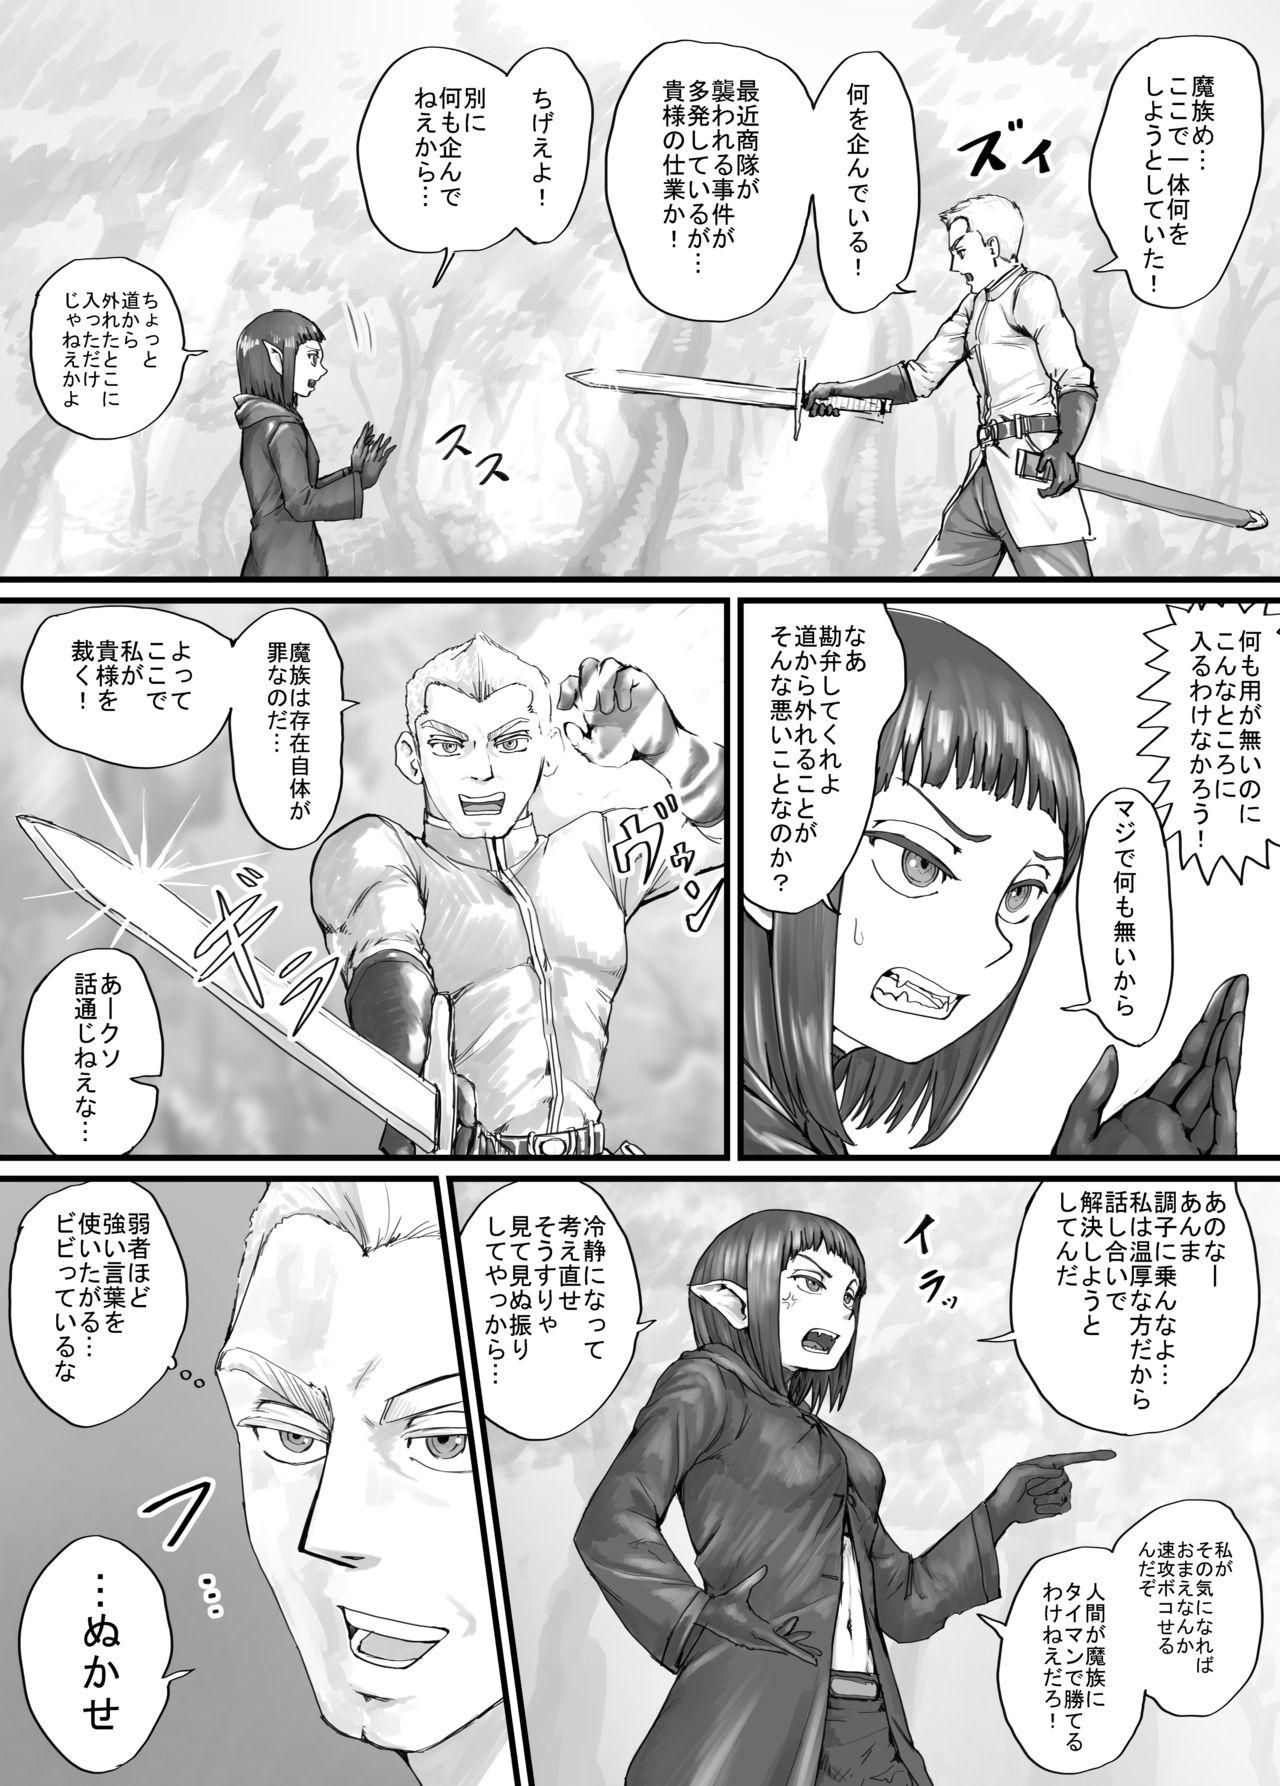 Throat Fuck 魔族ちゃん漫画1 - Original Pick Up - Page 5